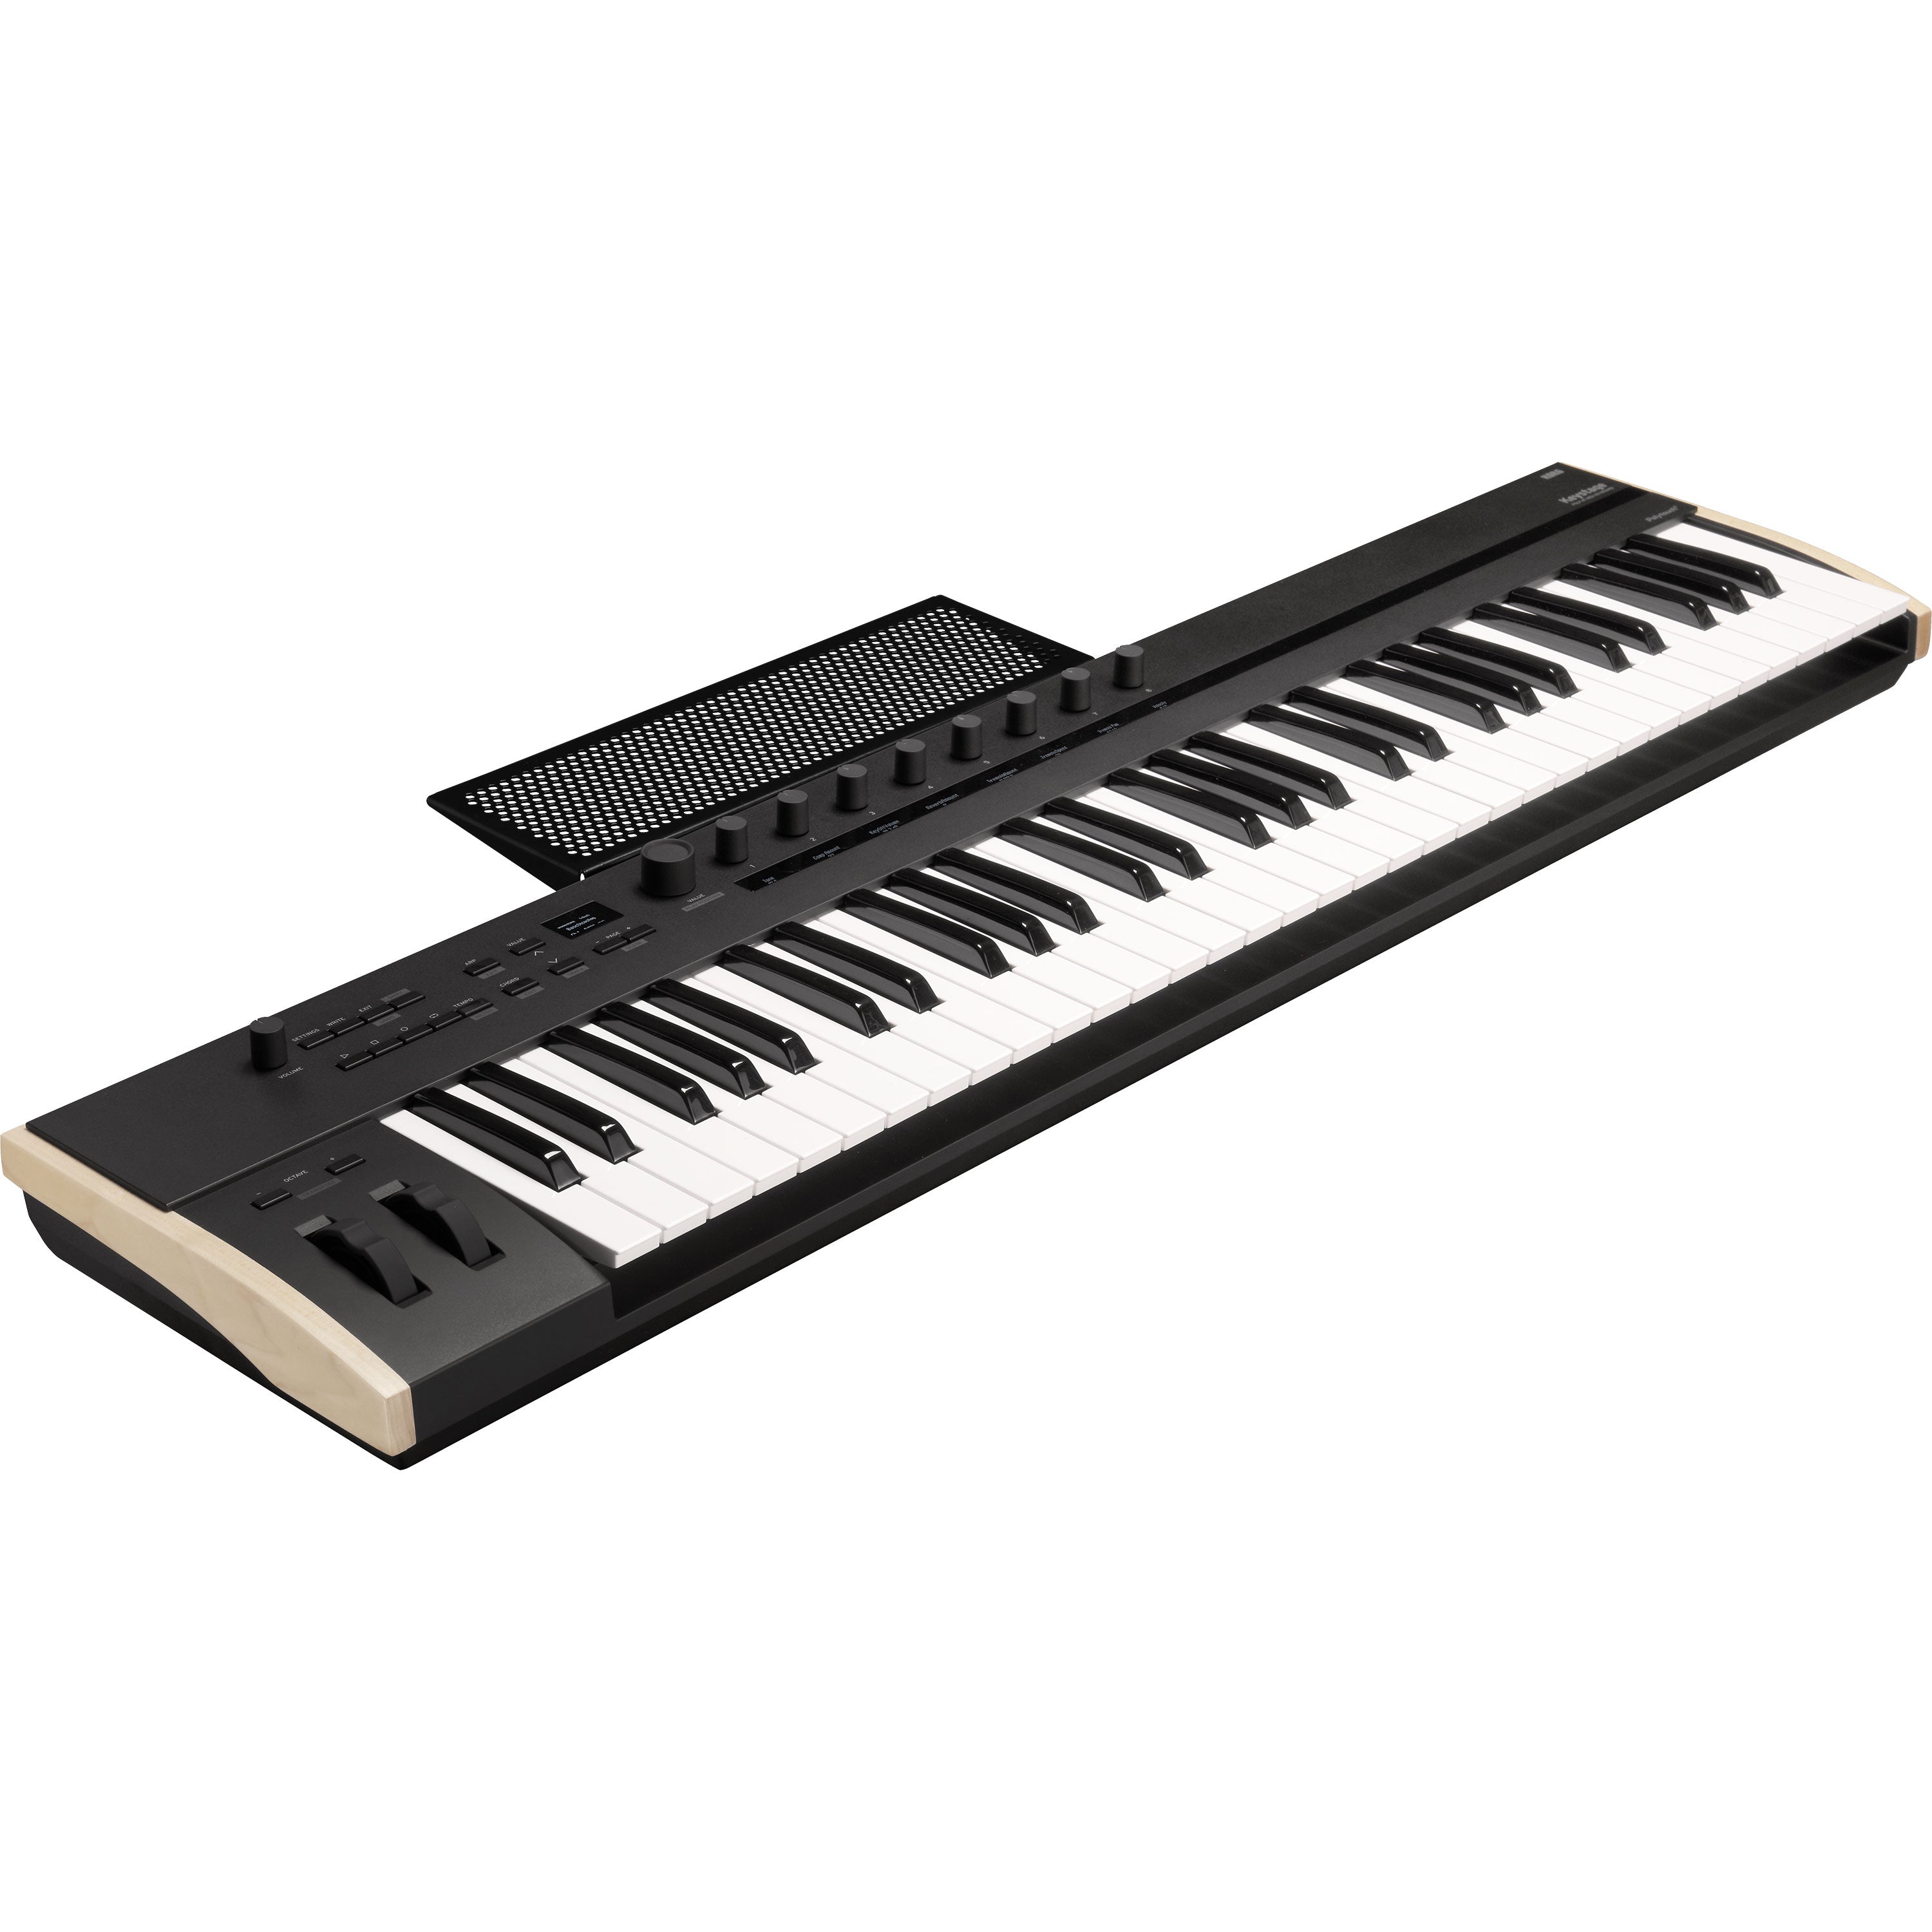 MIDI keyboards, Komplete